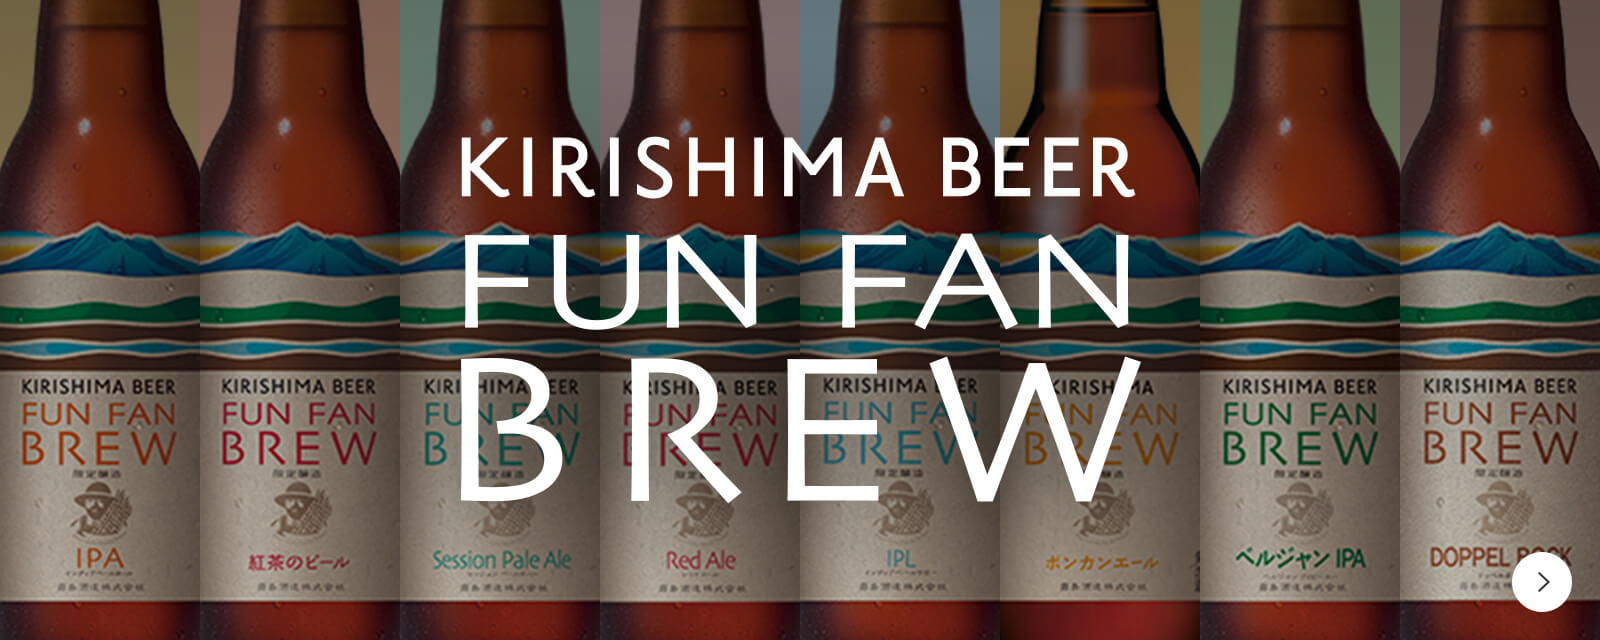 KIRISHIMA BEER FUN FAN BREW シリーズ第8弾 DOPPEL BOCK バナーリンク